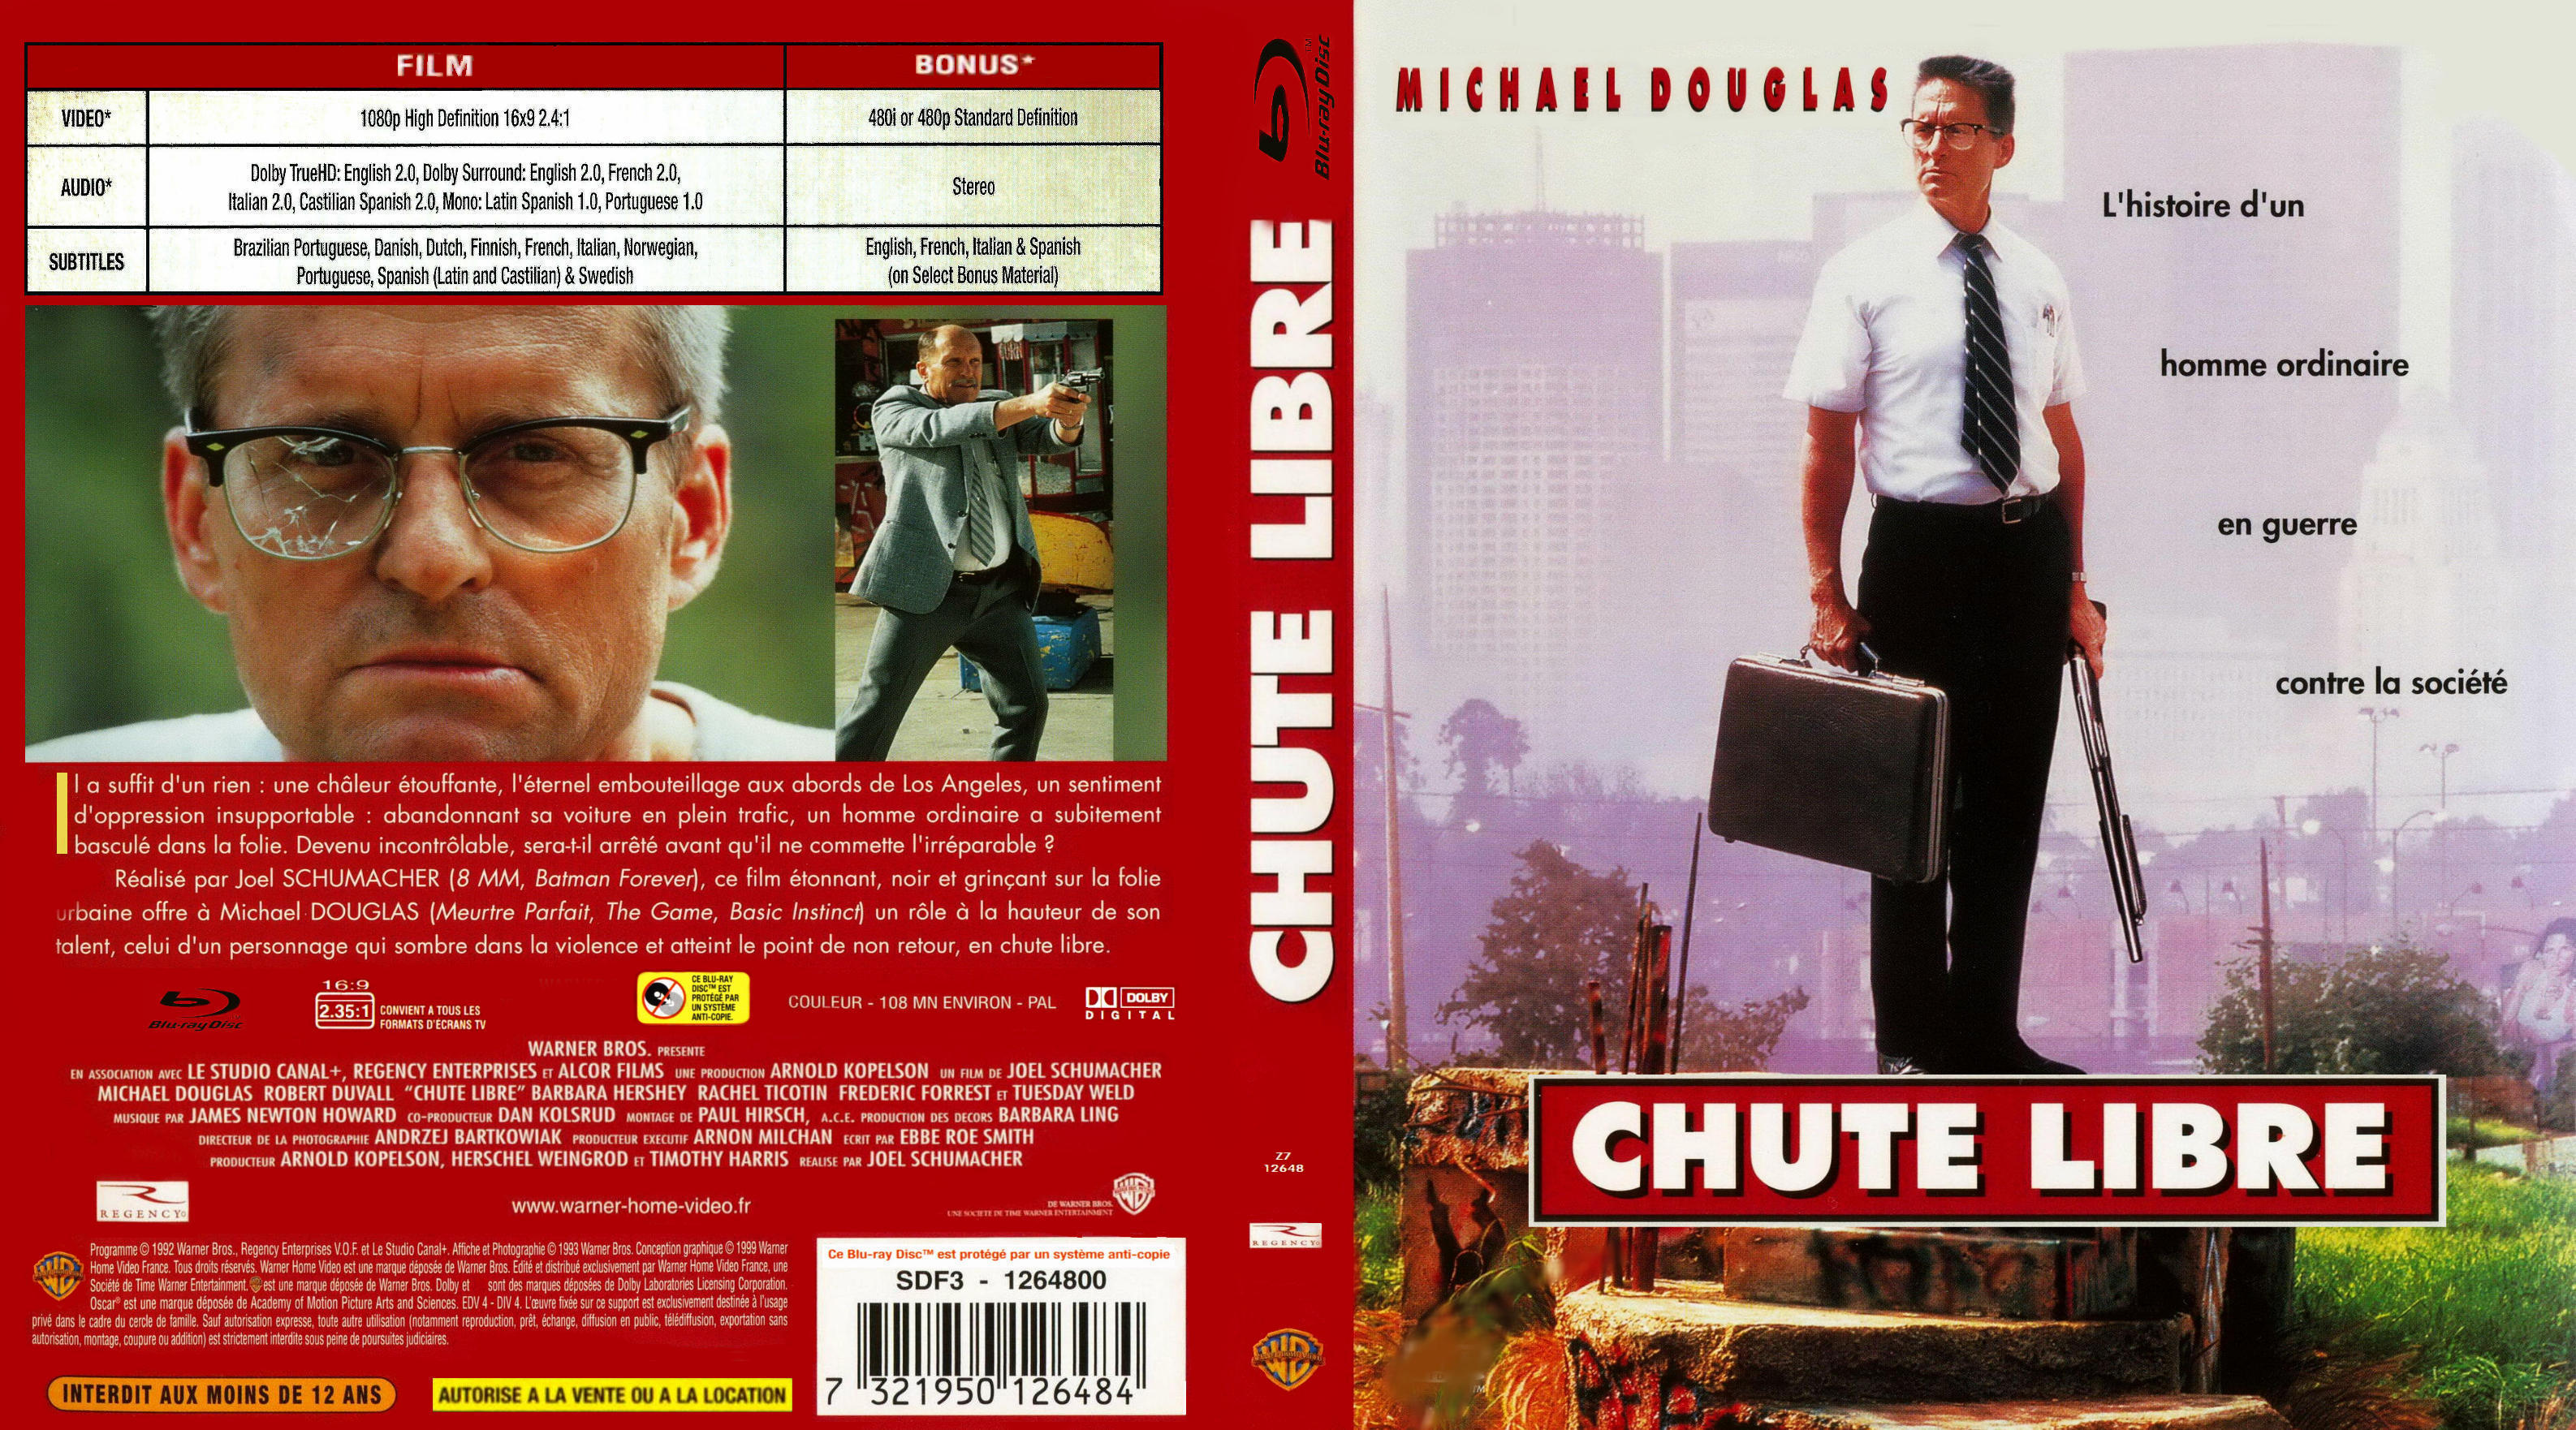 Jaquette DVD de Chute libre custom (BLU-RAY) - Cinéma Passion3173 x 1762